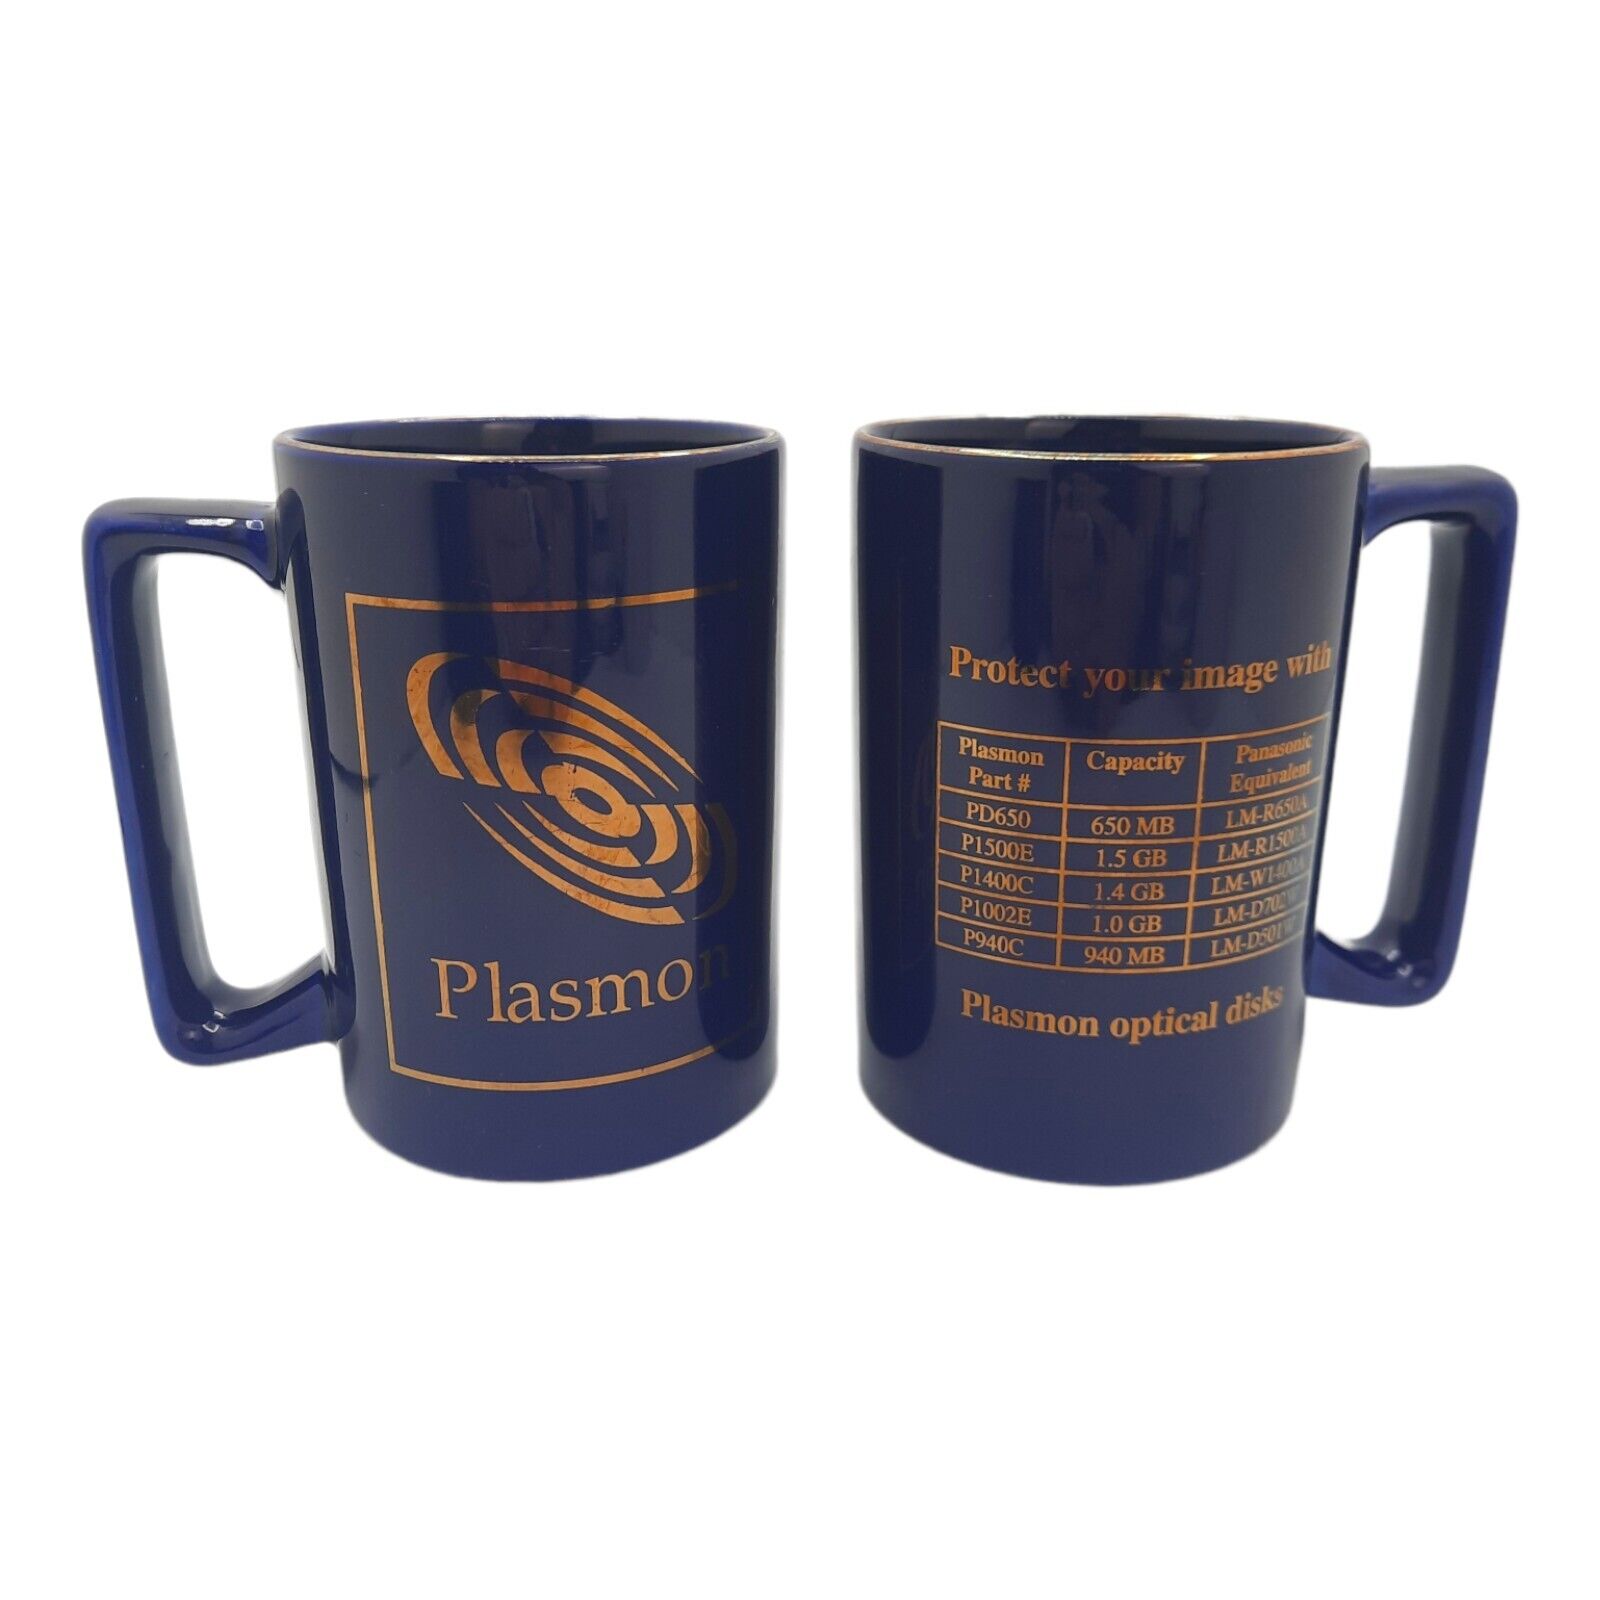 Vintage Tech PLASMON Optical Drives Ceramic Coffee Mug Cup RARE [ LOT OF 2 ]